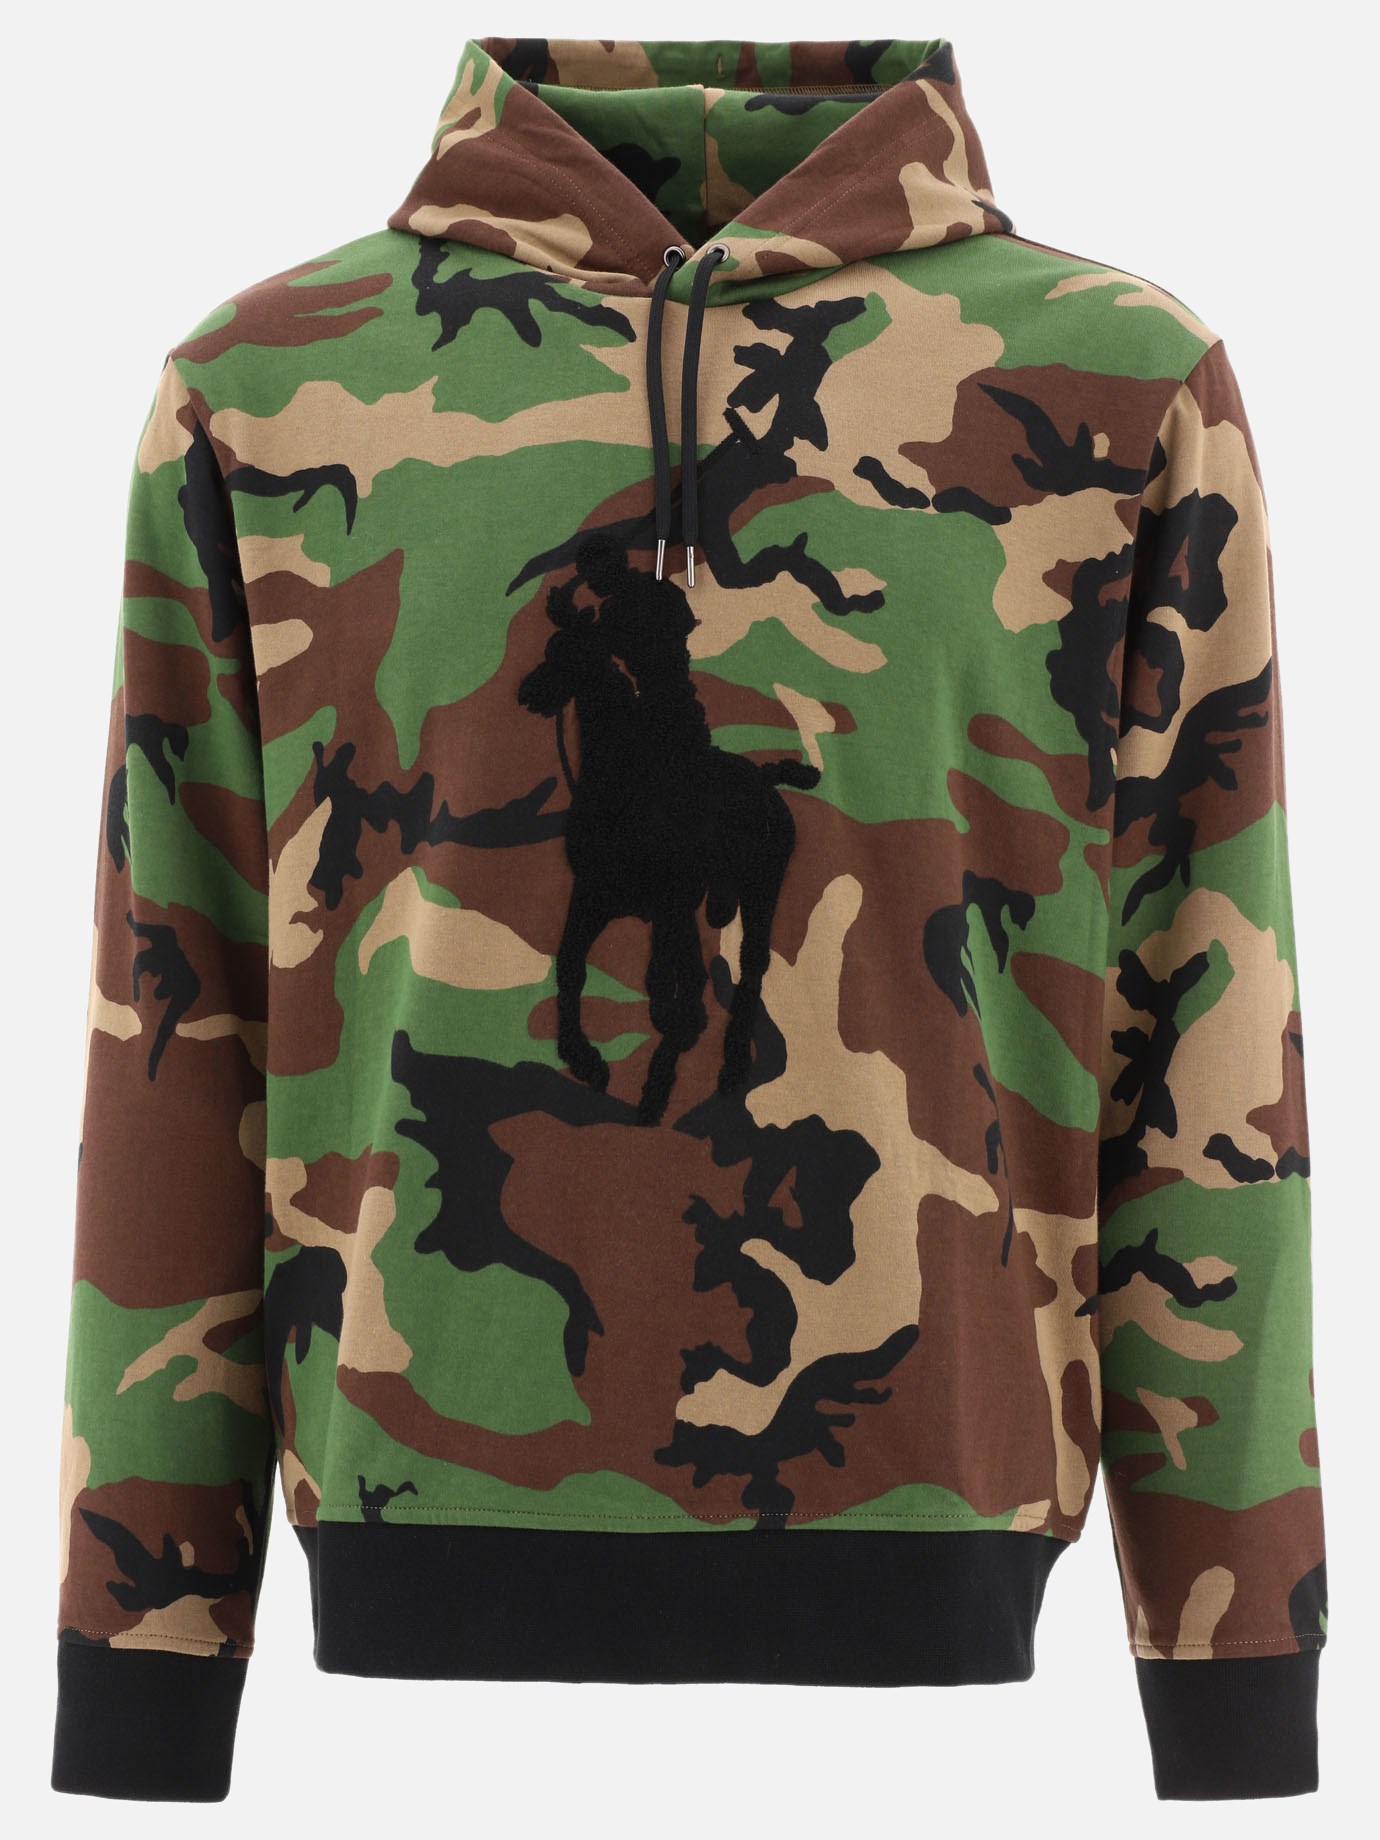  Pony  camouflage hoodieby Polo Ralph Lauren - 0